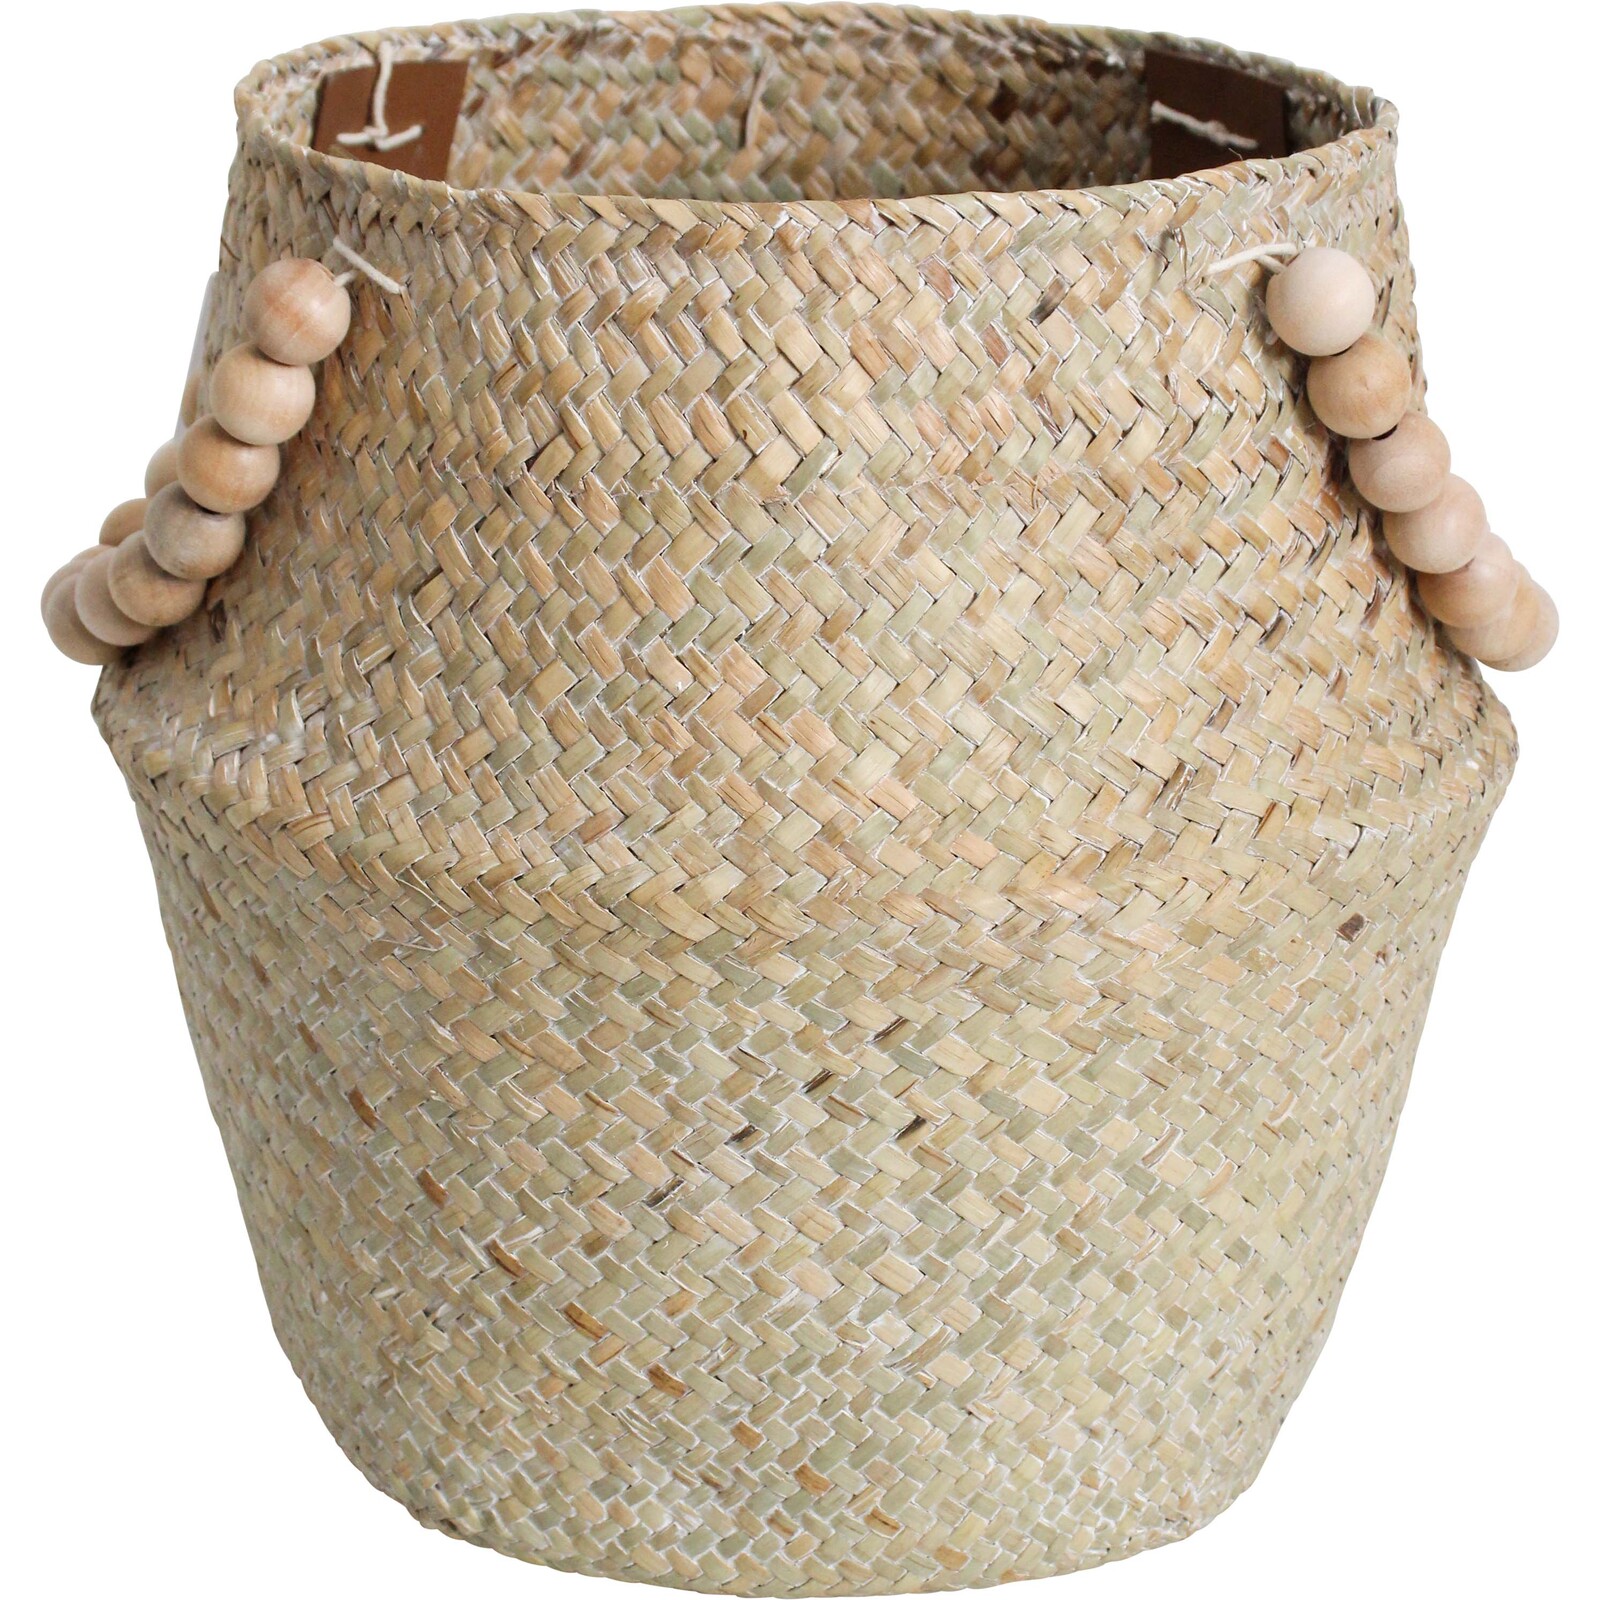 Belly Basket Wash Beads